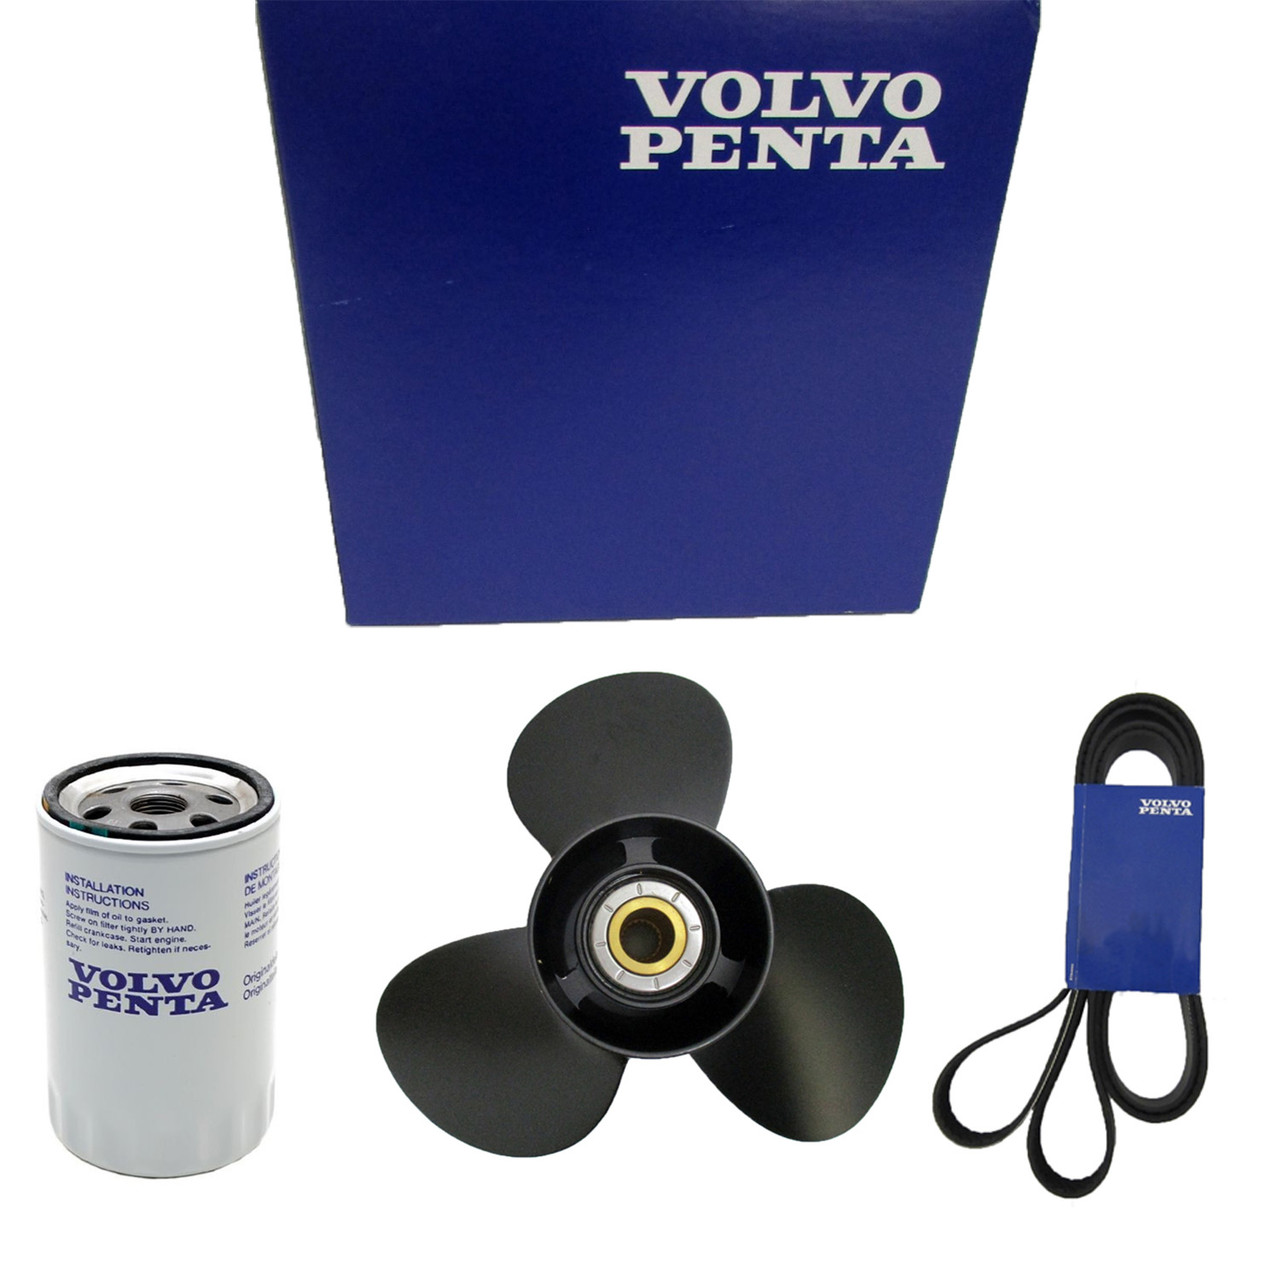 Volvo Penta New OEM Fuel Filter, 3584125